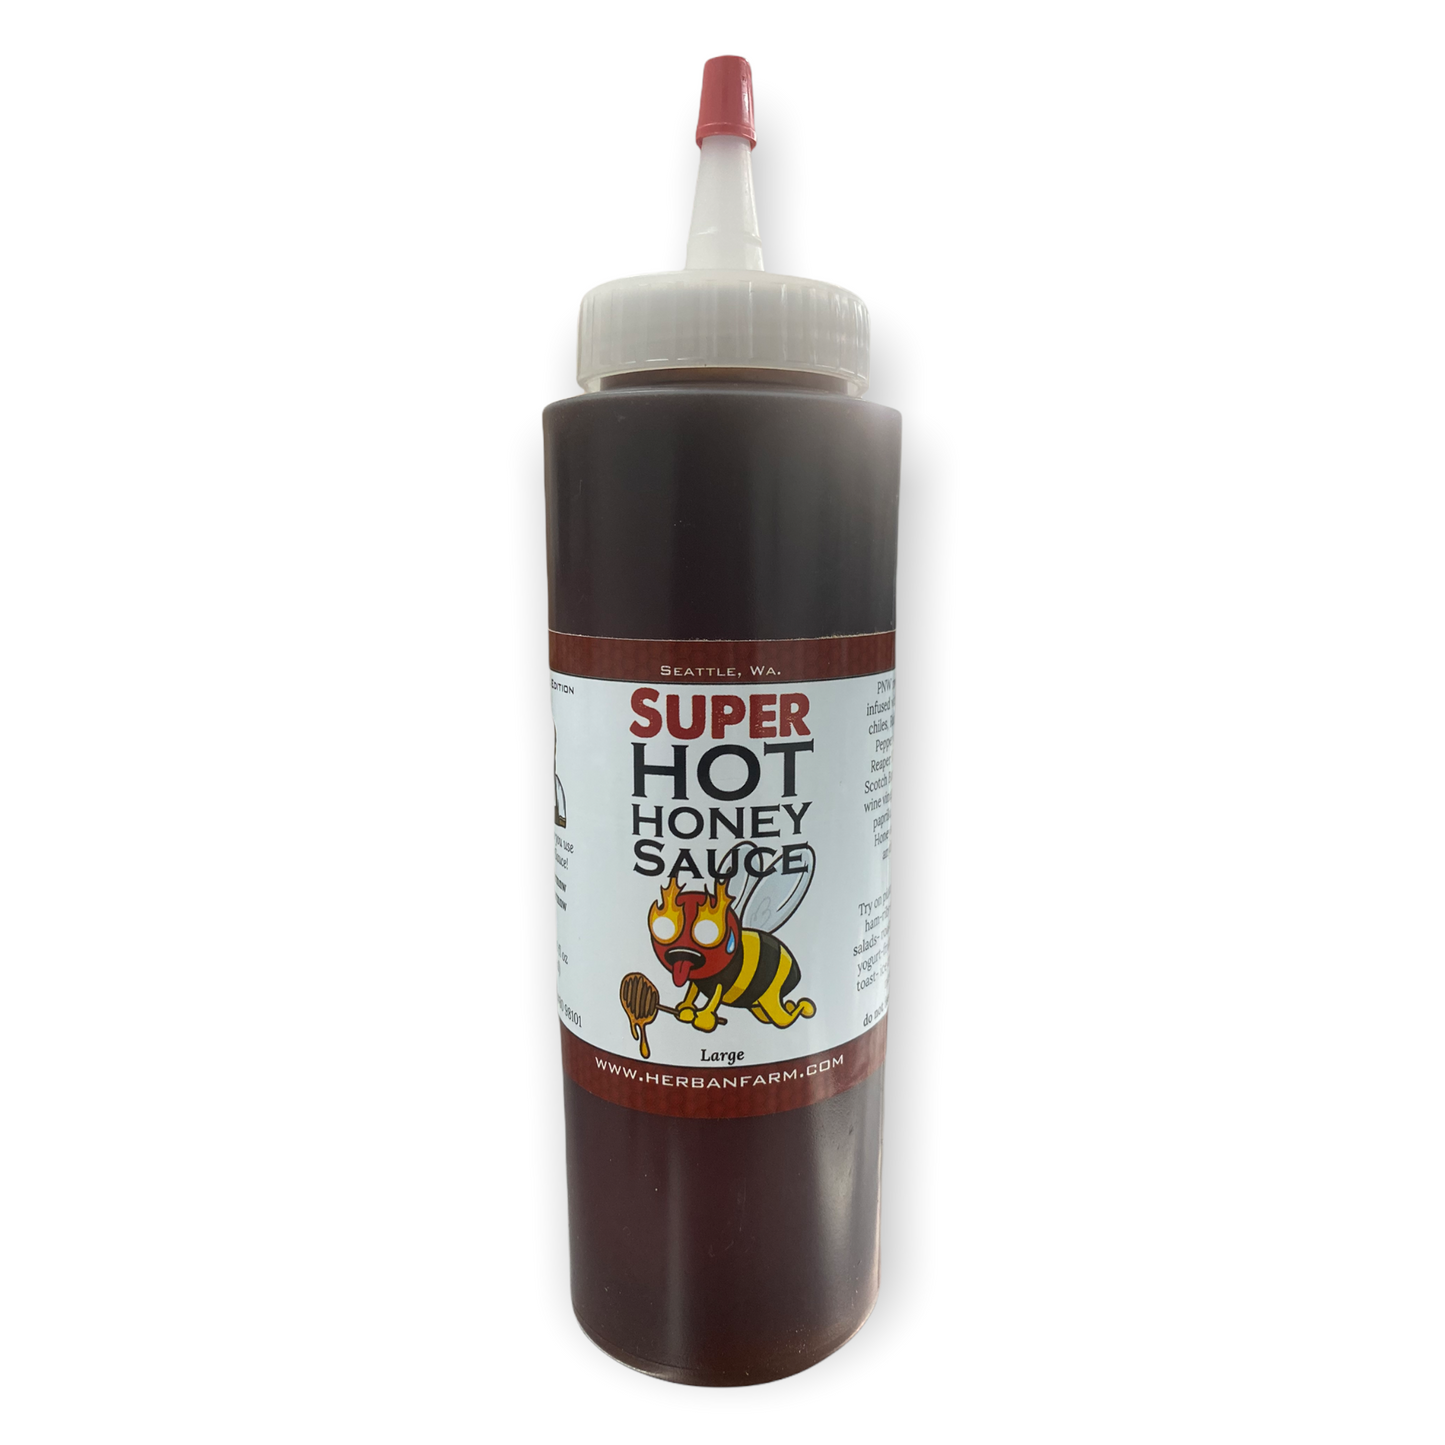 Super Hot Honey Sauce